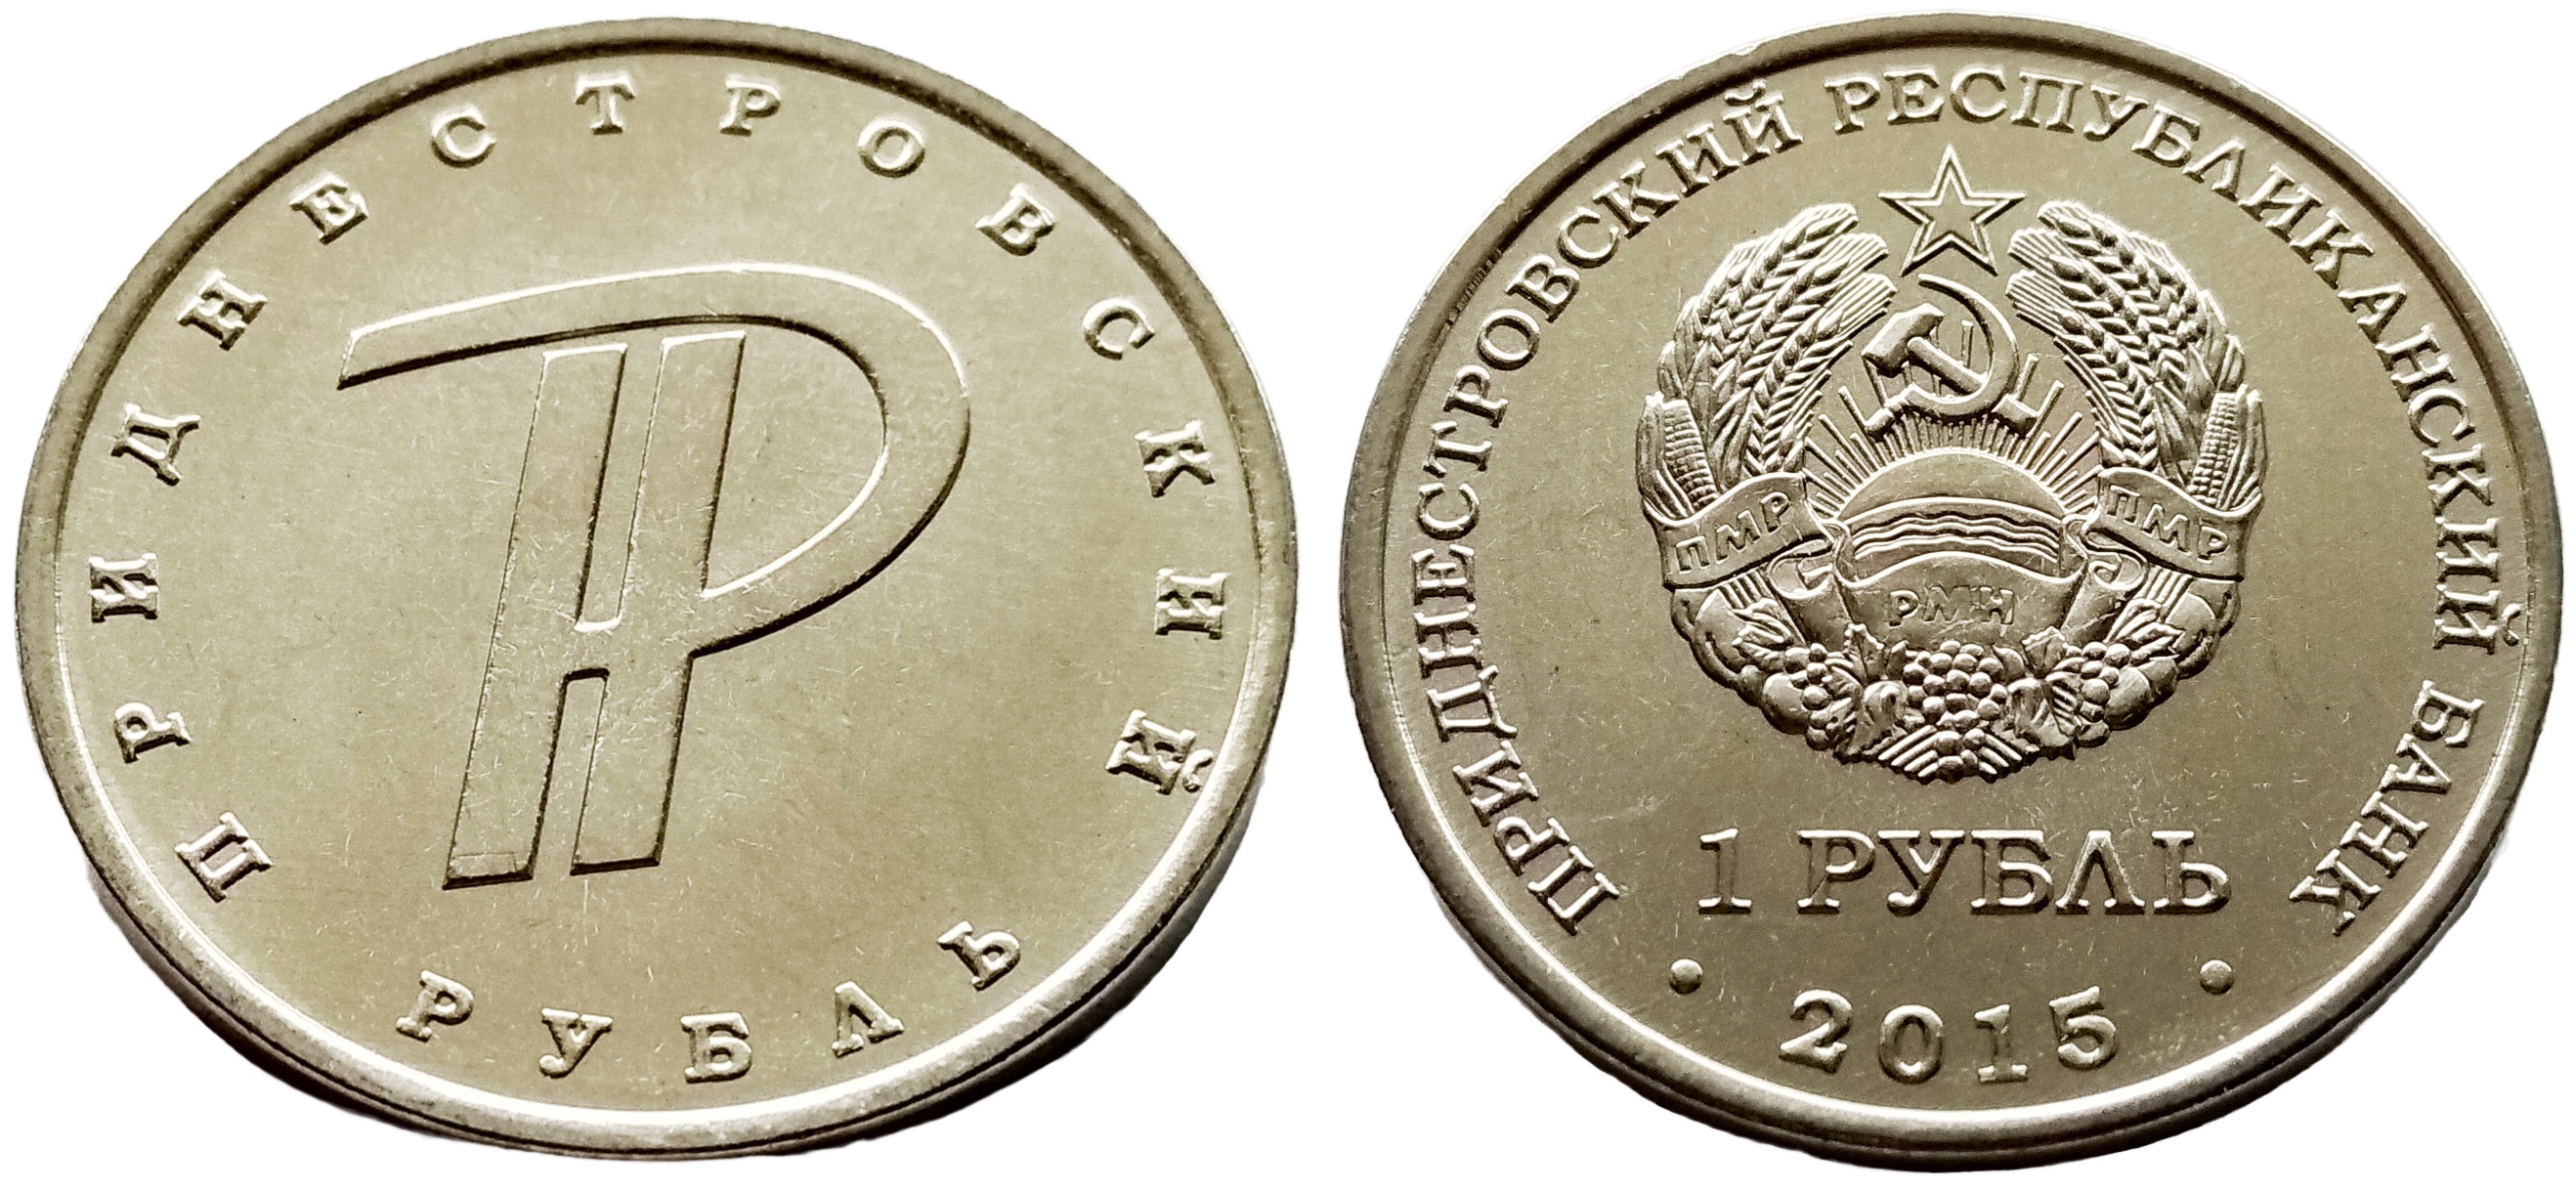 1 mark each. ГДР 1 пфенниг 1961. Монета 1 пфенниг 1968. Германия - ГДР 1 пфенниг, 1968. Монета Deutsche Demokratische Republik 1968.